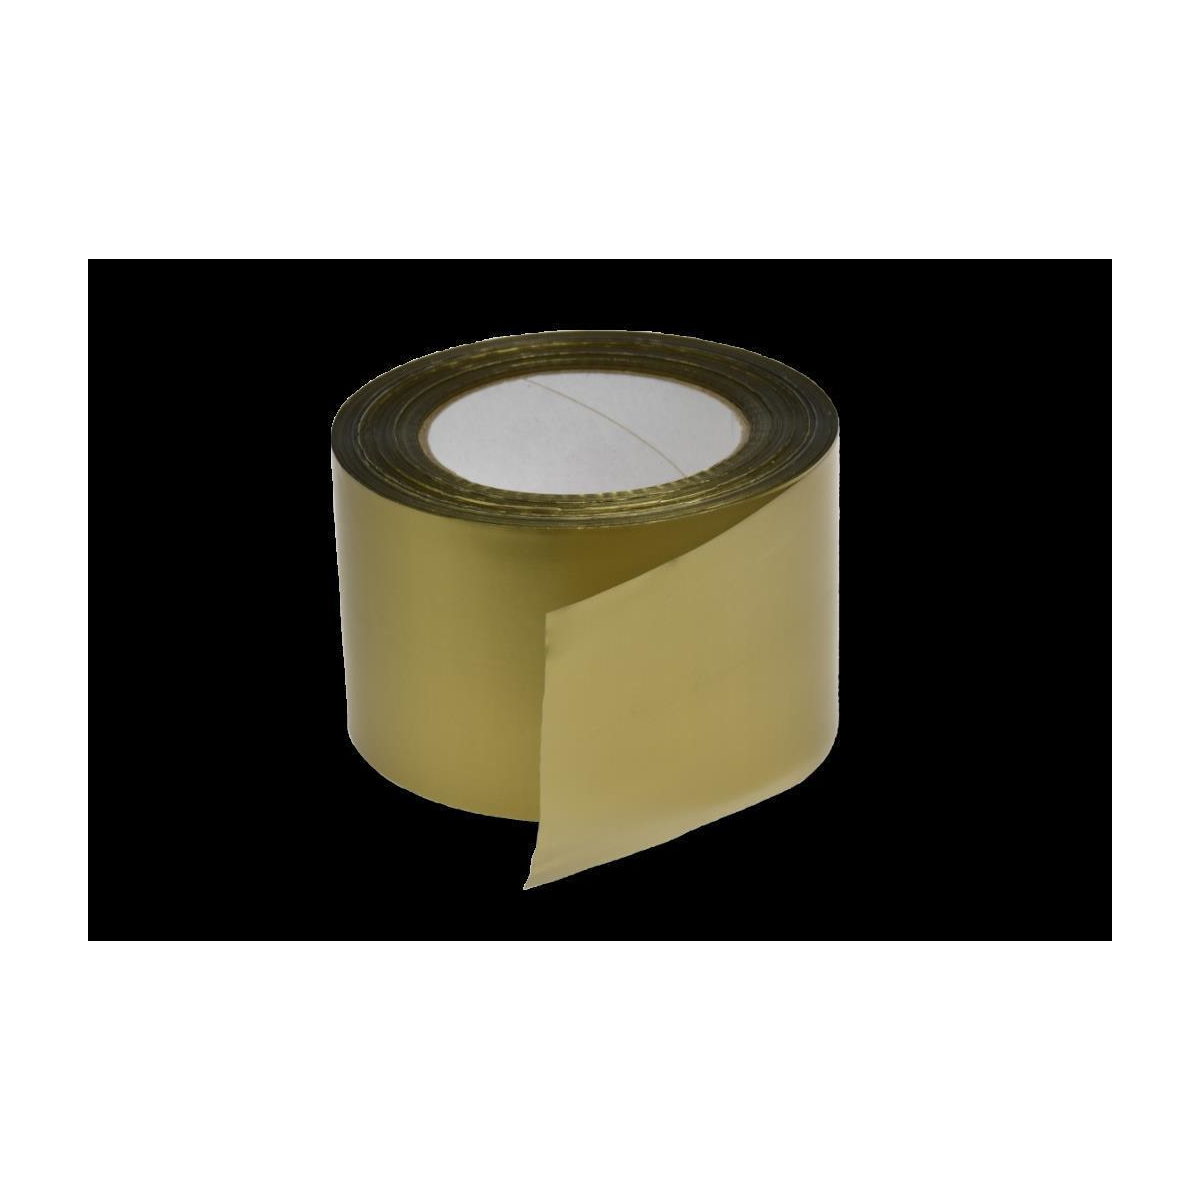 Absperrband gold 75 mm x 250 m 1 Rolle